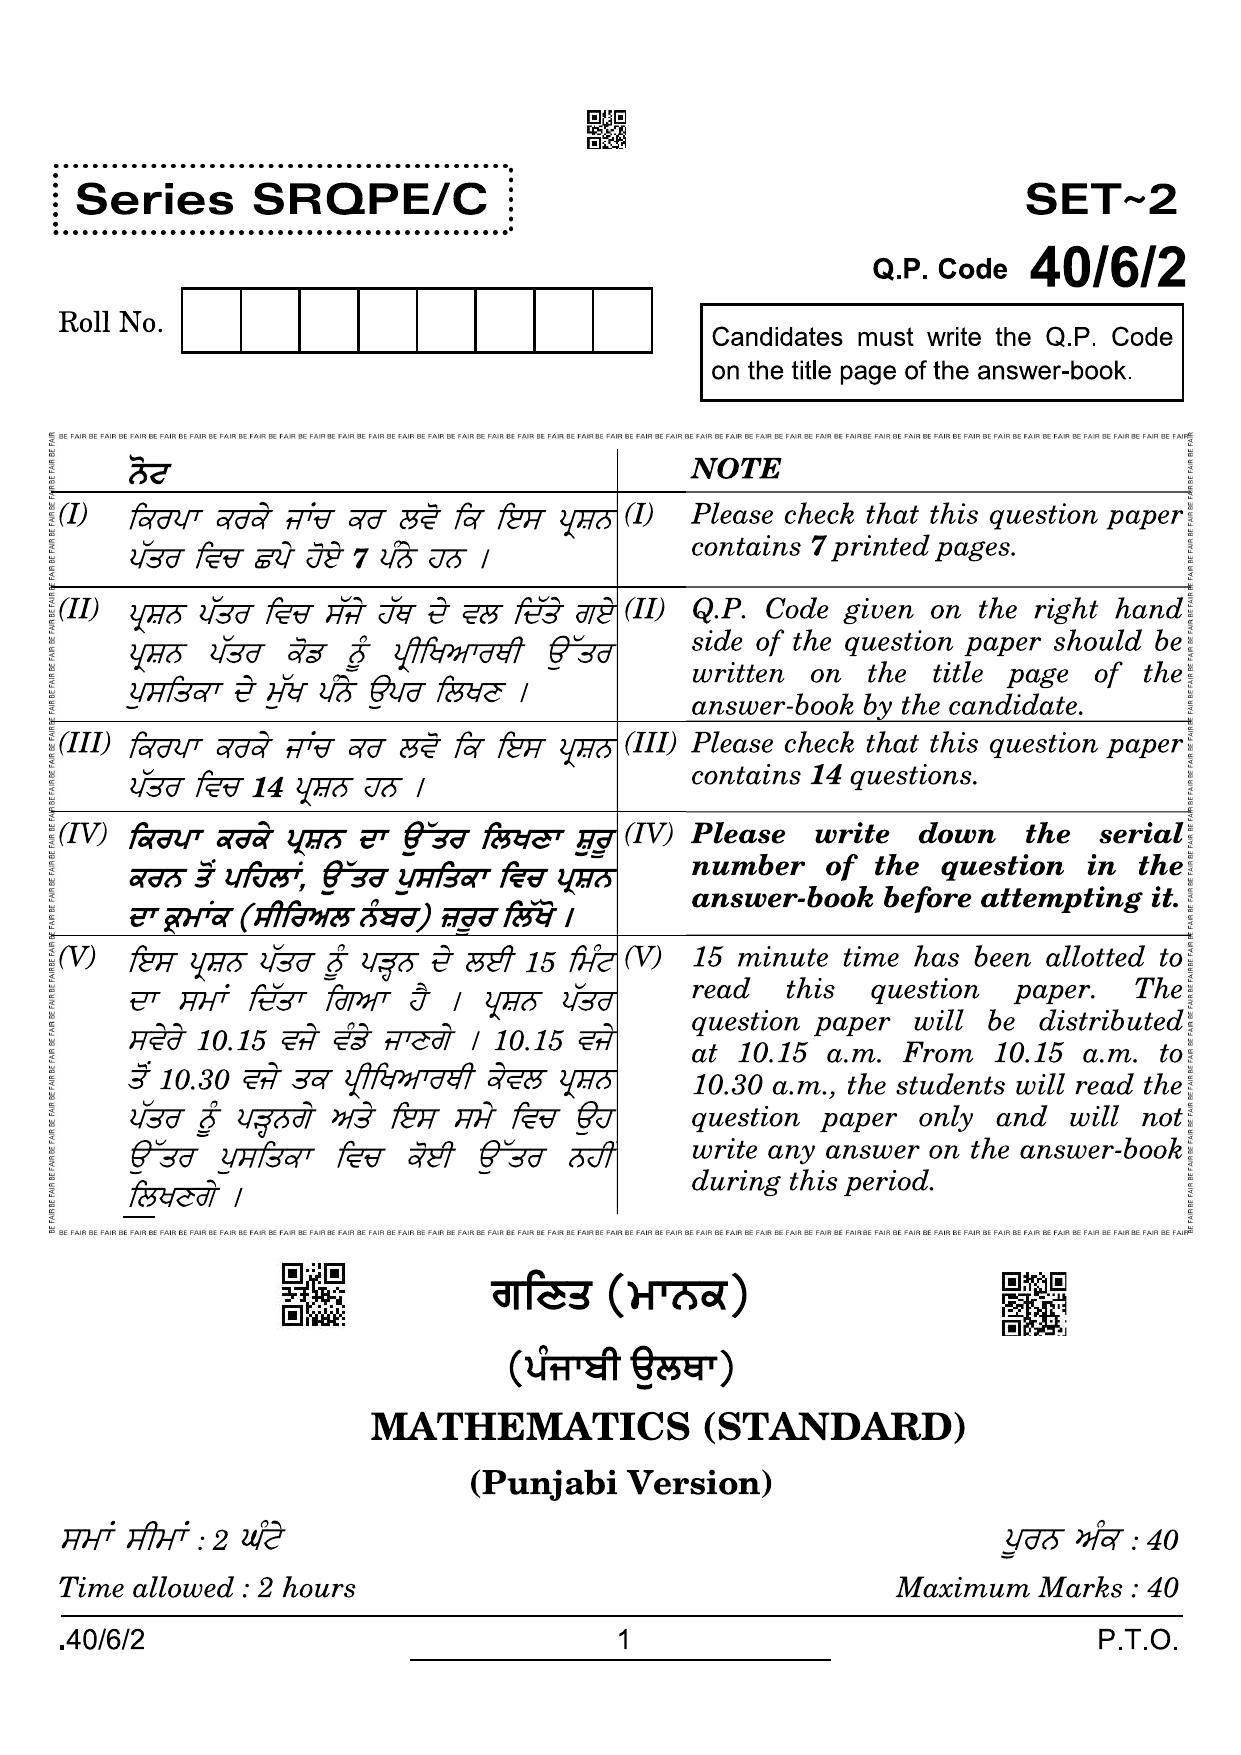 CBSE Class 10 40-6-2 Maths Std Punjabi 2022 Compartment Question Paper - Page 1